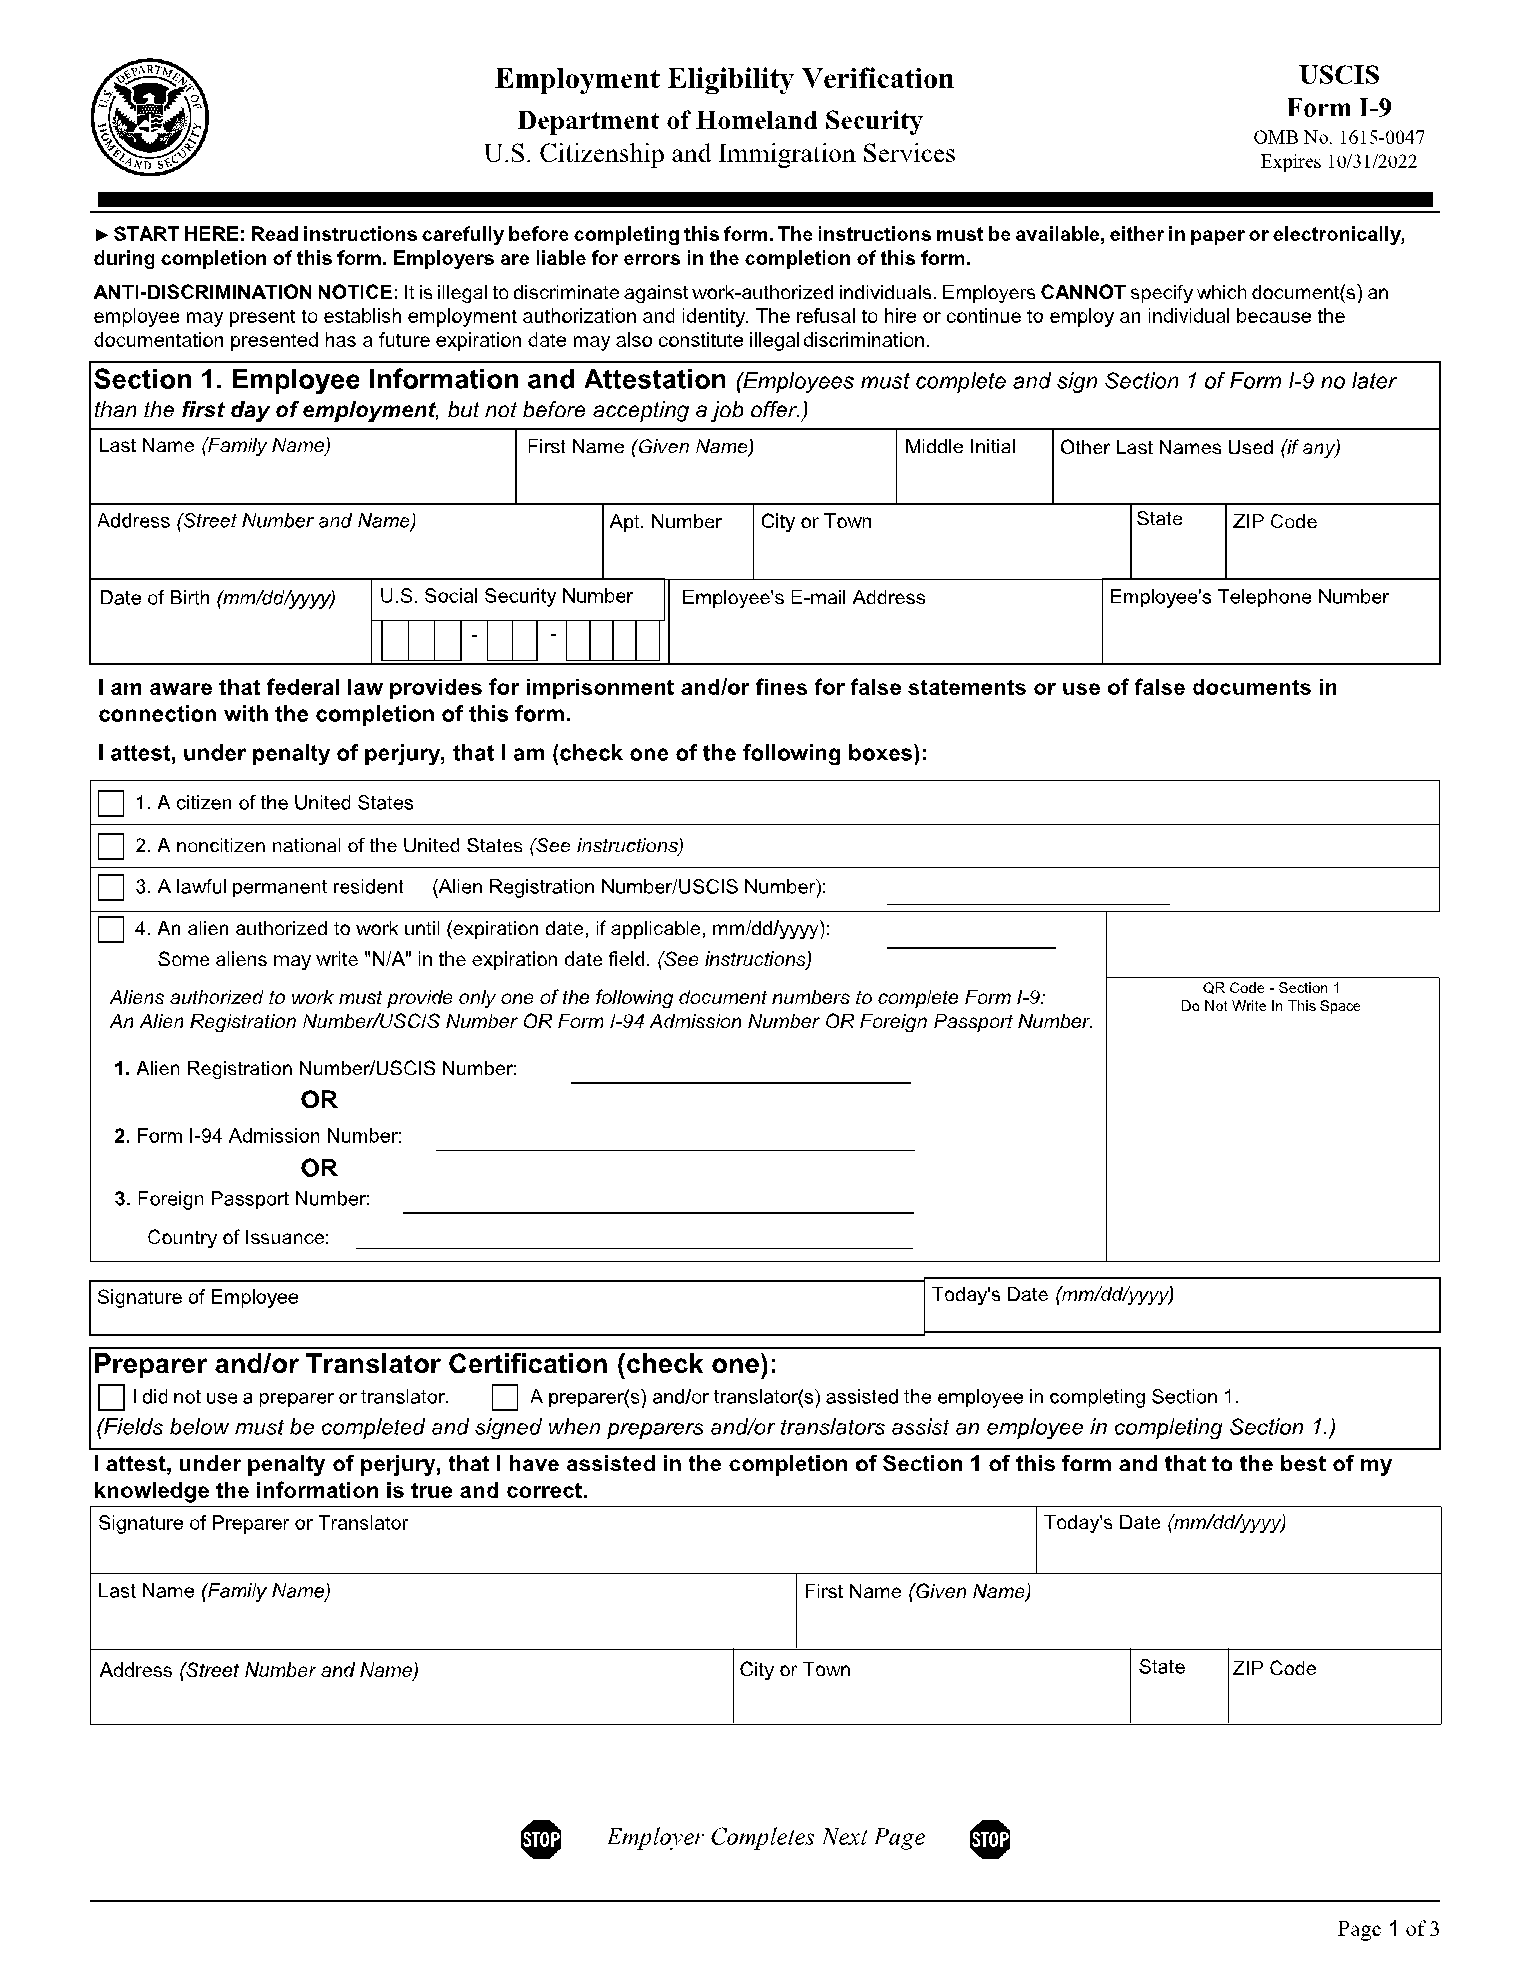 I-9 Form PDF